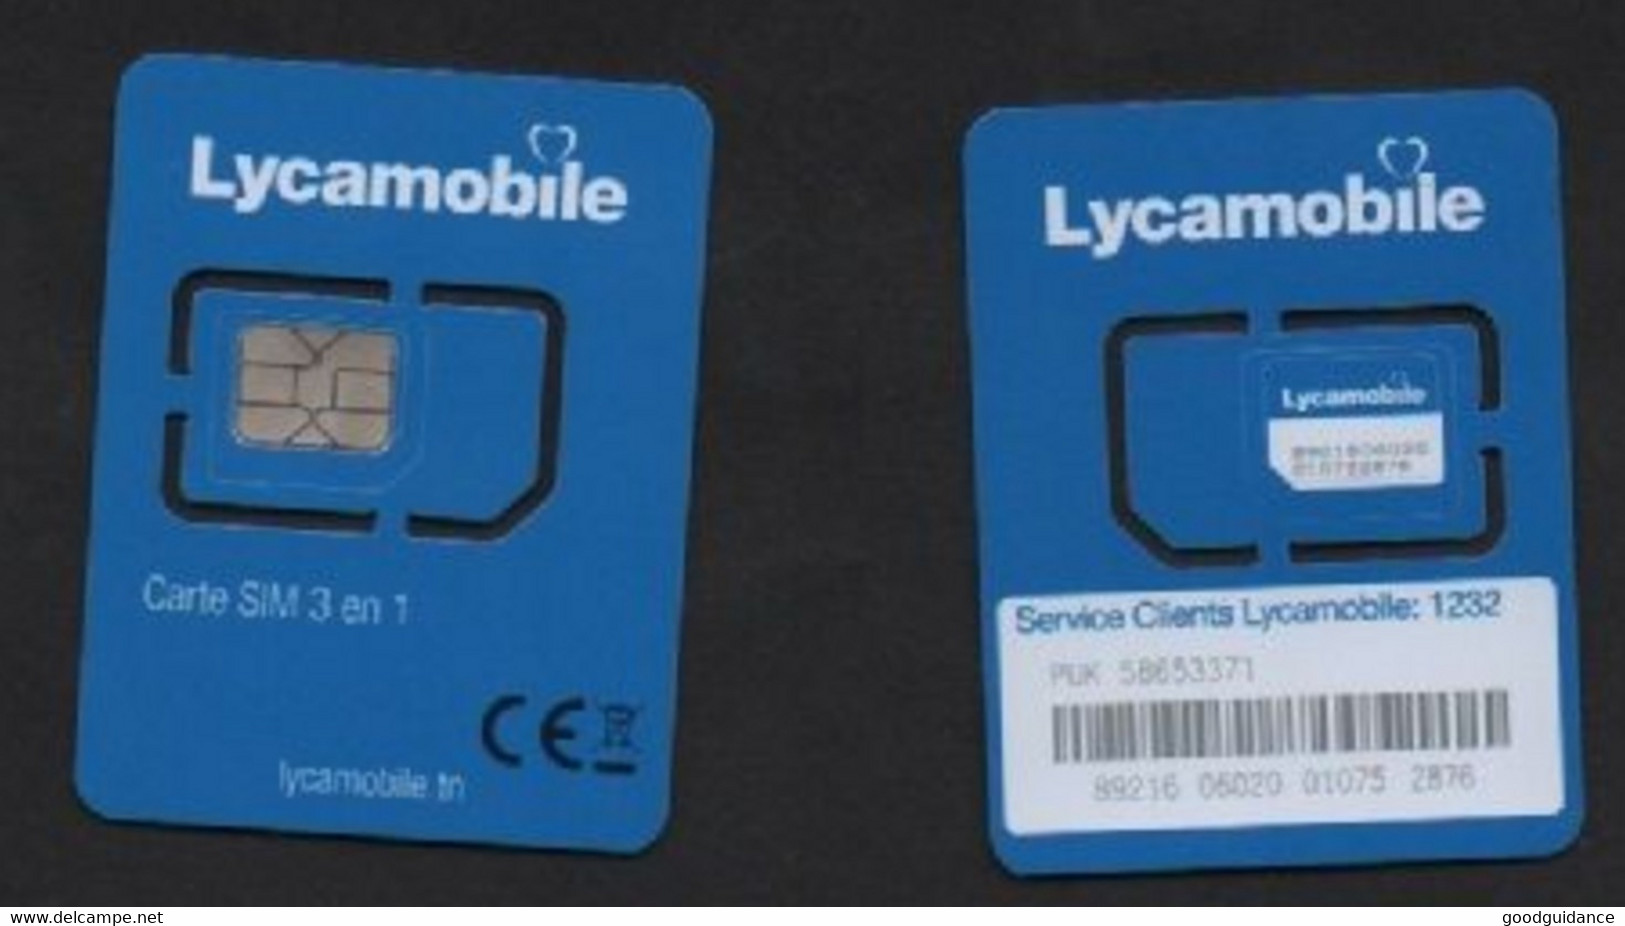 Tunisia- Tunisie - Lycamobile - Mini/Micro/Nano SIM Card 4G - Not Used - Tunesië